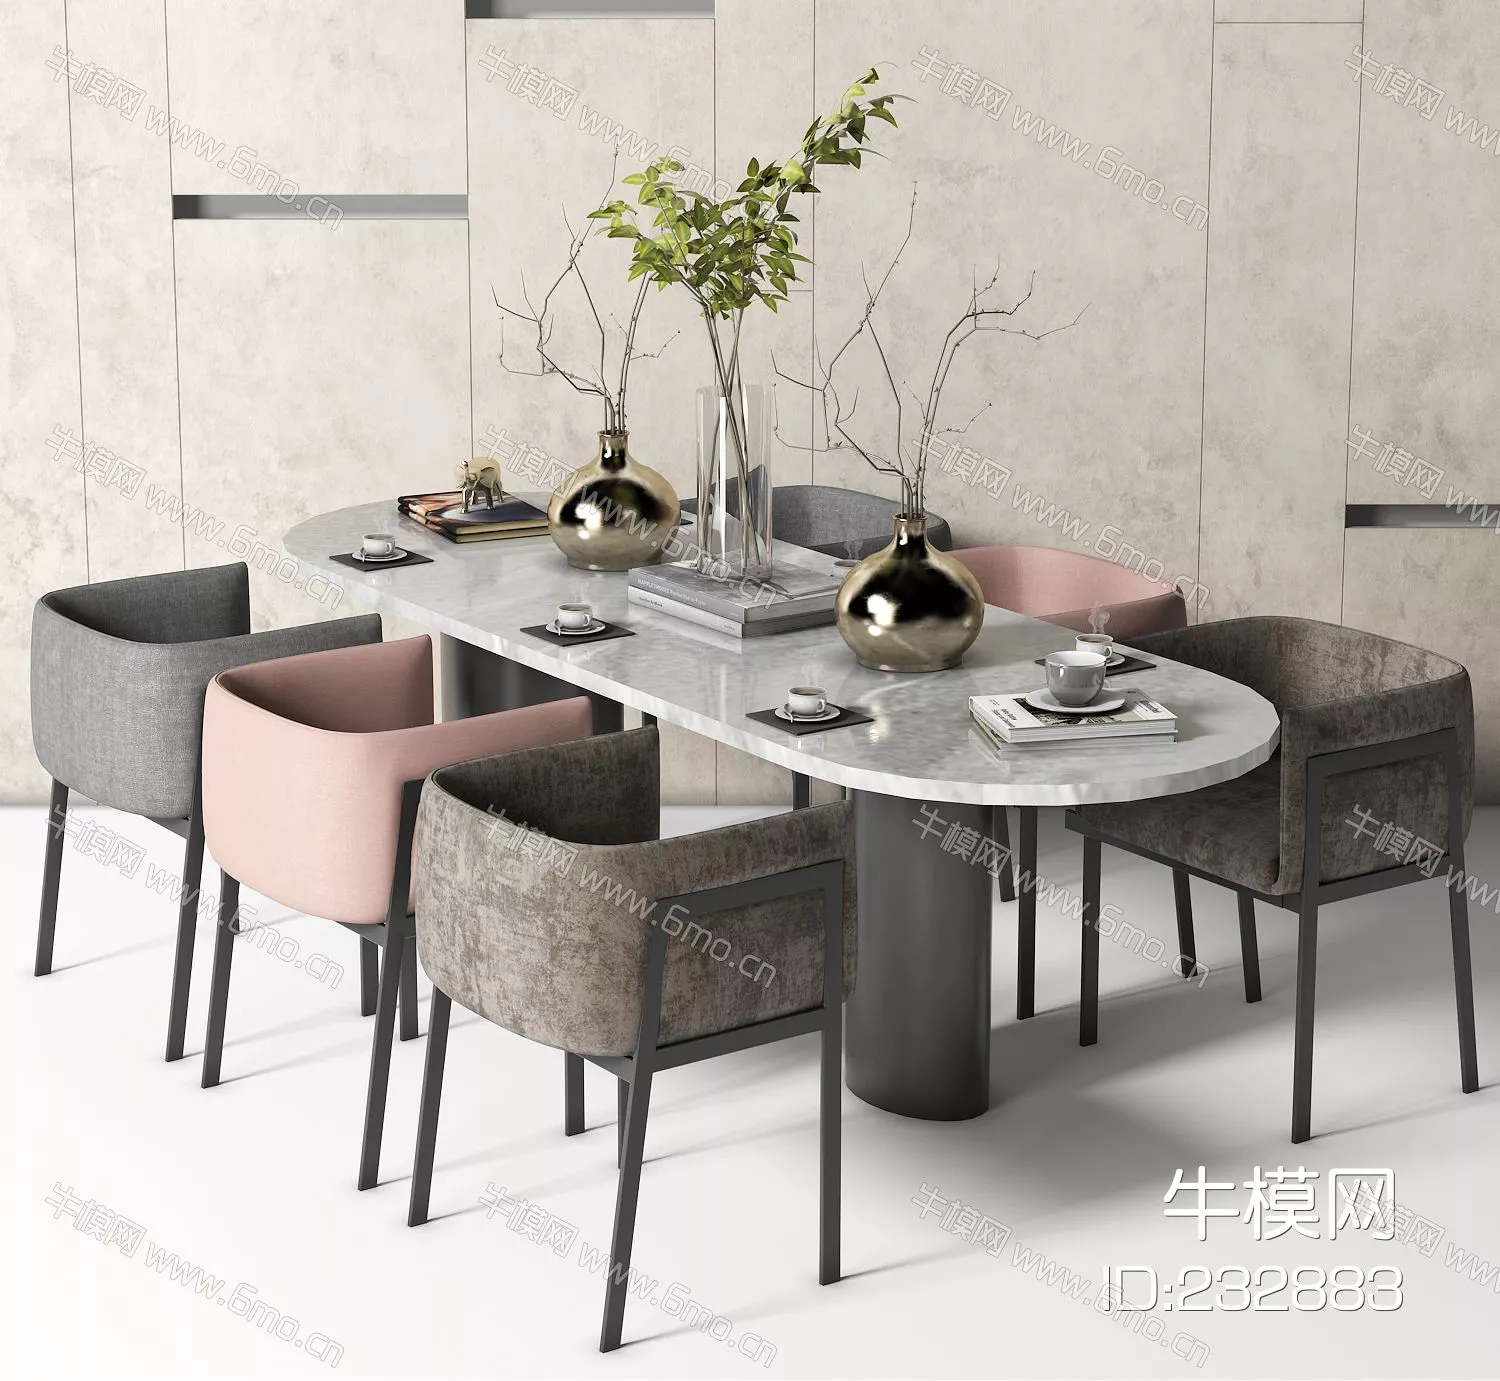 MODERN DINING TABLE SET - SKETCHUP 3D MODEL - VRAY - 232883